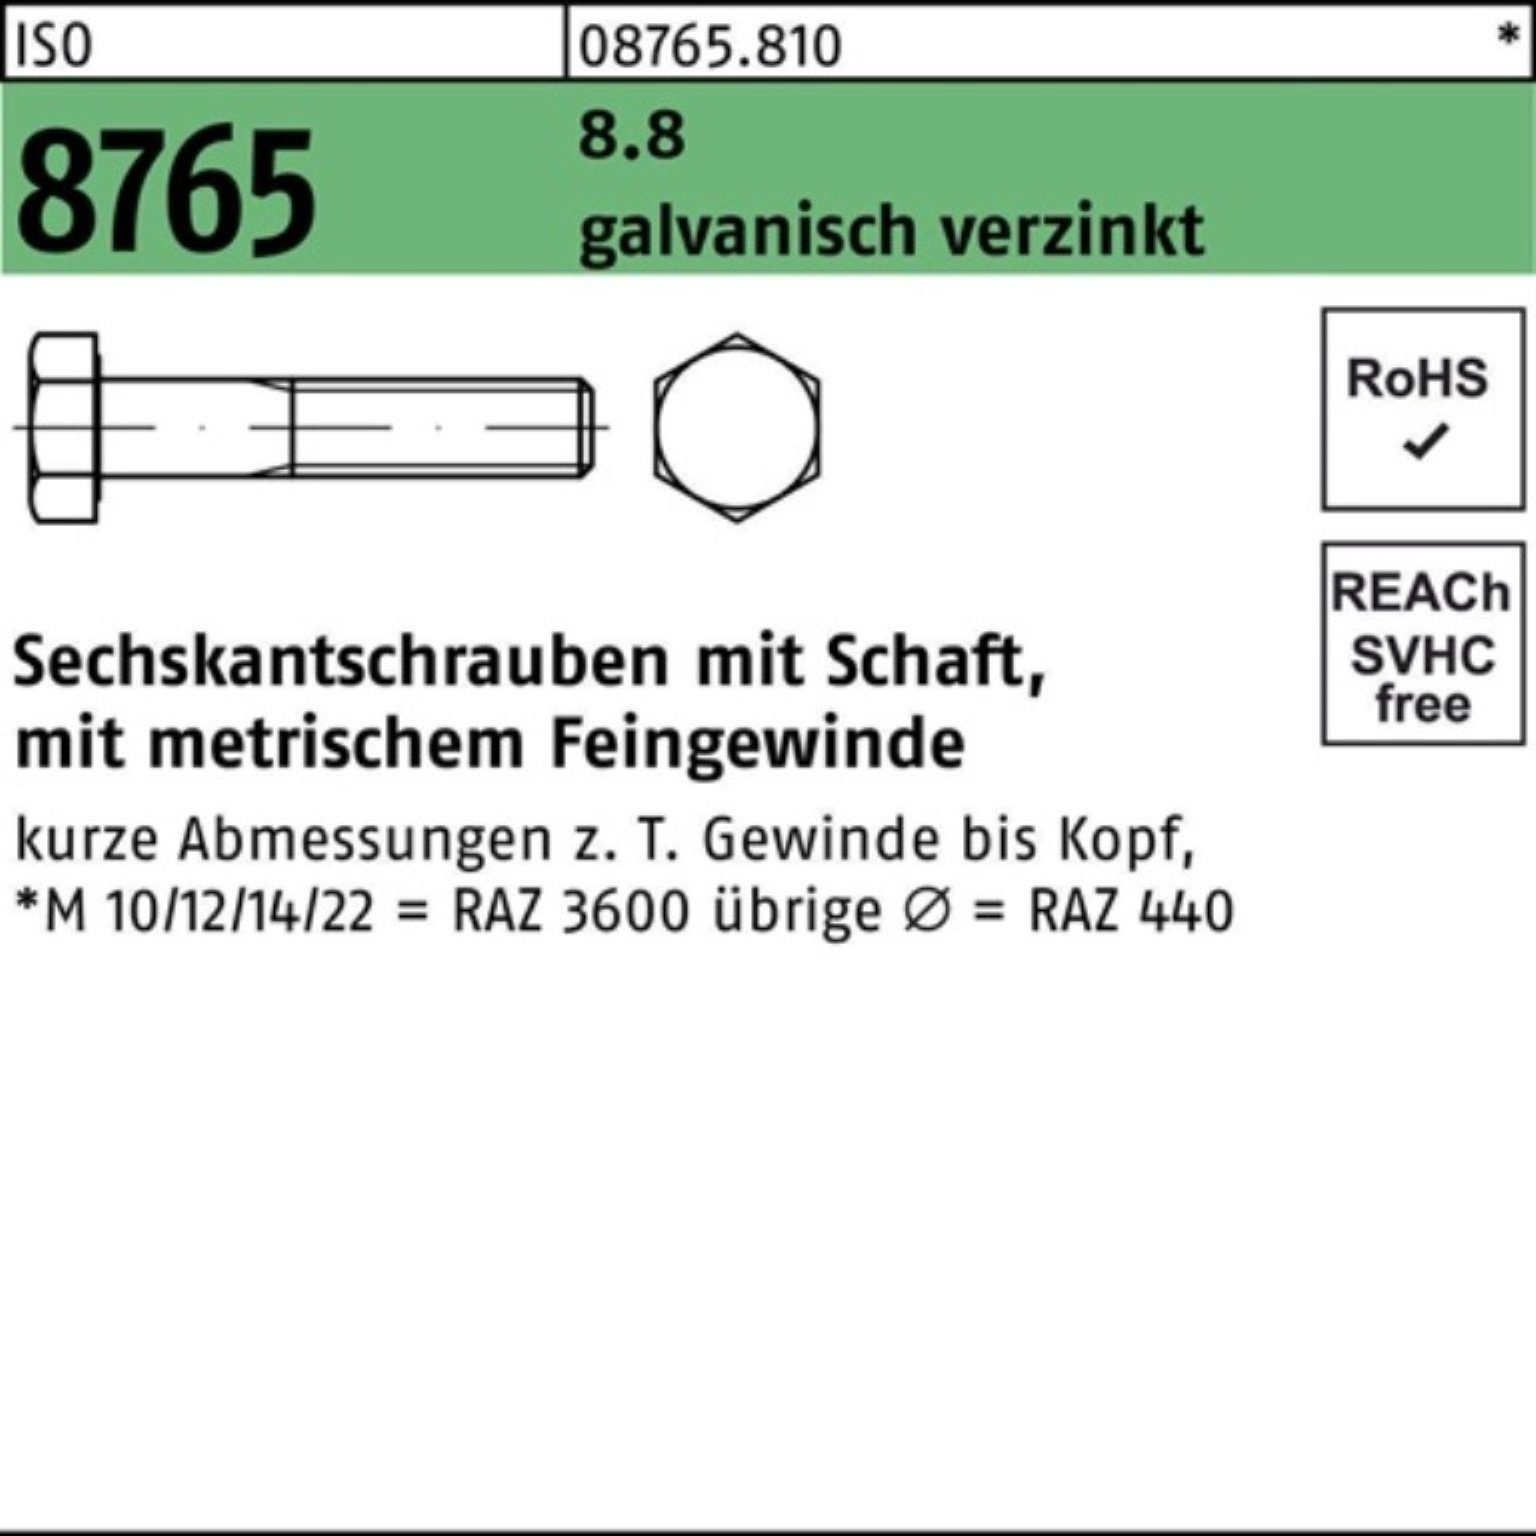 Reyher Sechskantschraube 8.8 M12x1,5x 50 galv.verz Pack 8765 ISO Schaft Sechskantschraube 100er